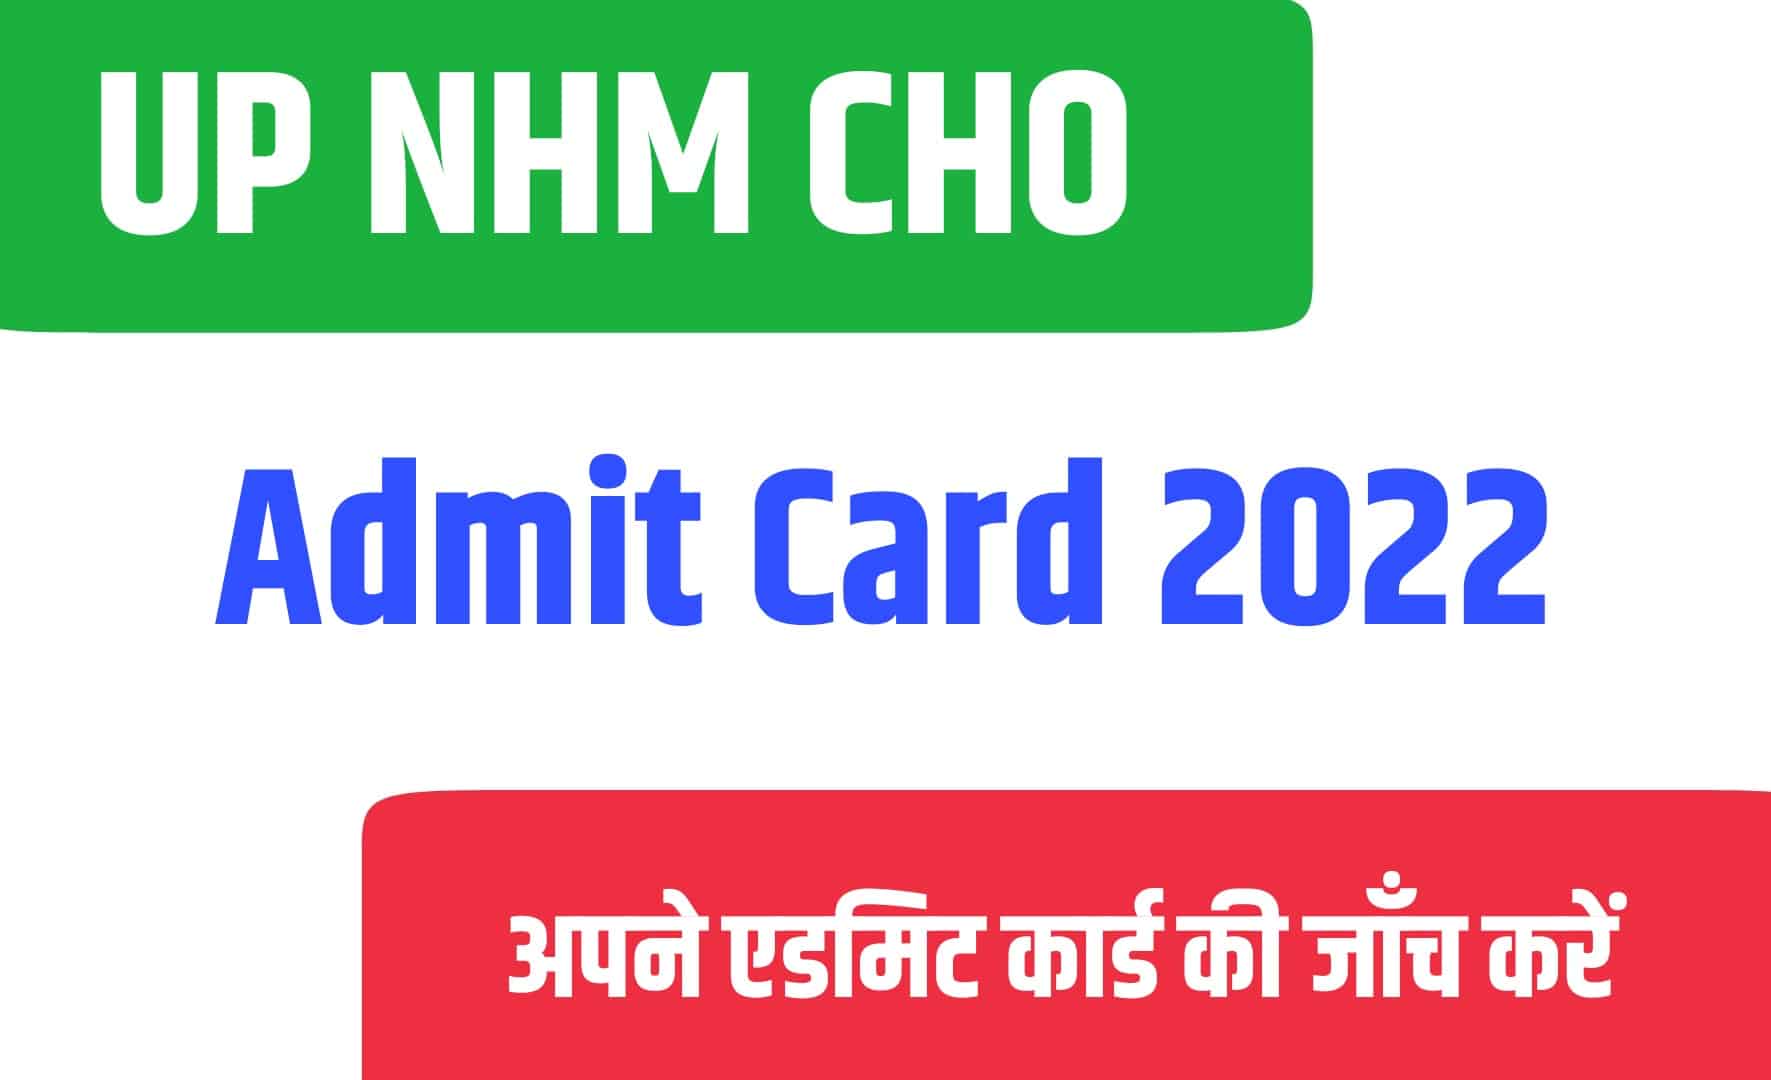 UP NHM CHO Admit Card 2022 | NHM CHO एडमिट कार्ड जारी